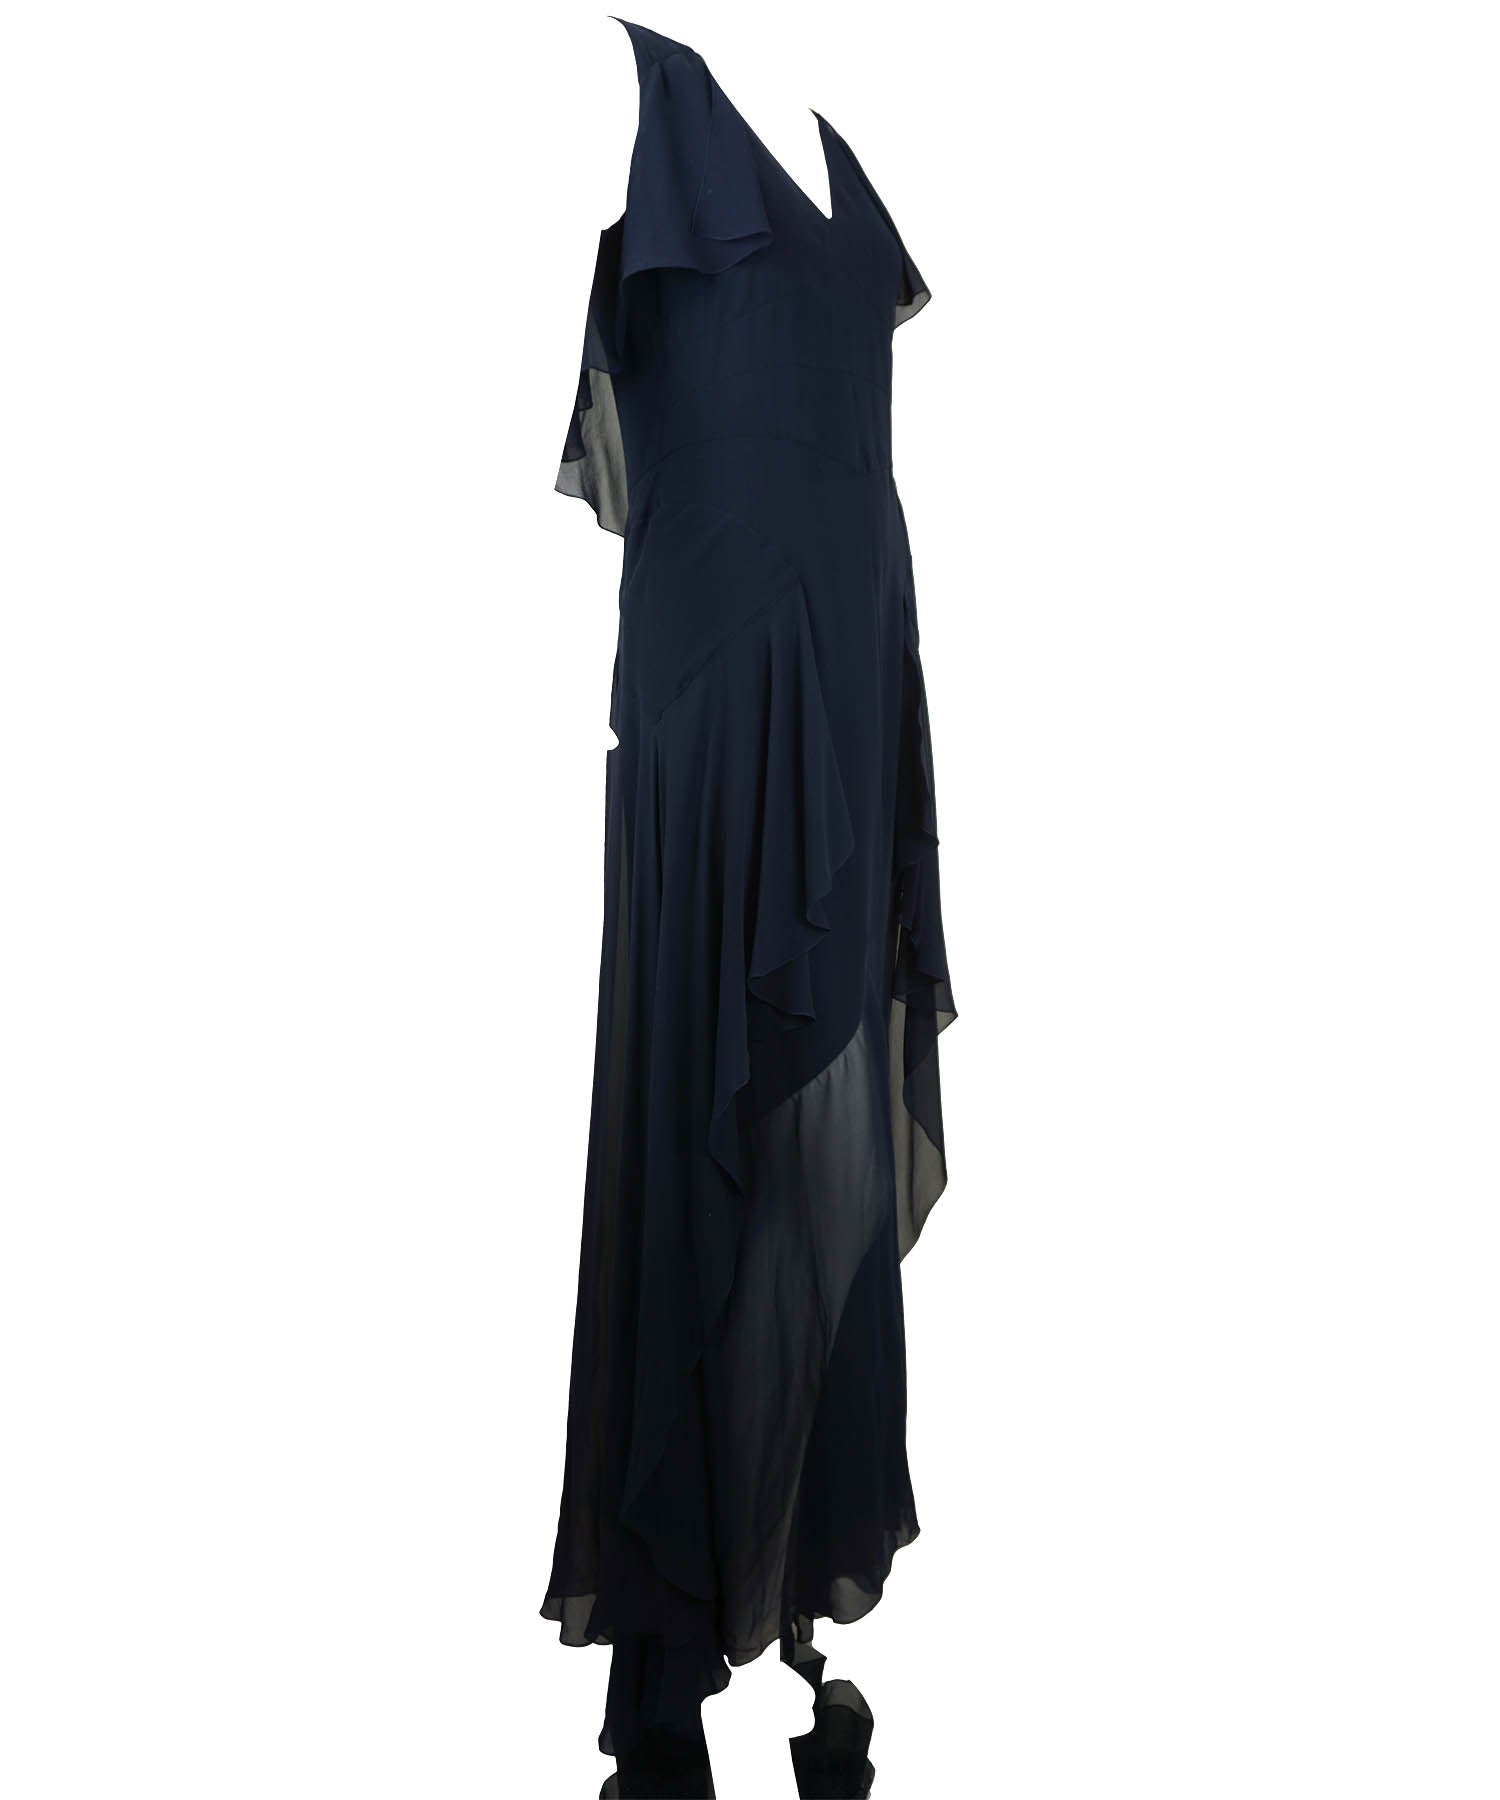 Chanel Sleeveless Layered Chiffon Gown W/Sheer Skirt 2006